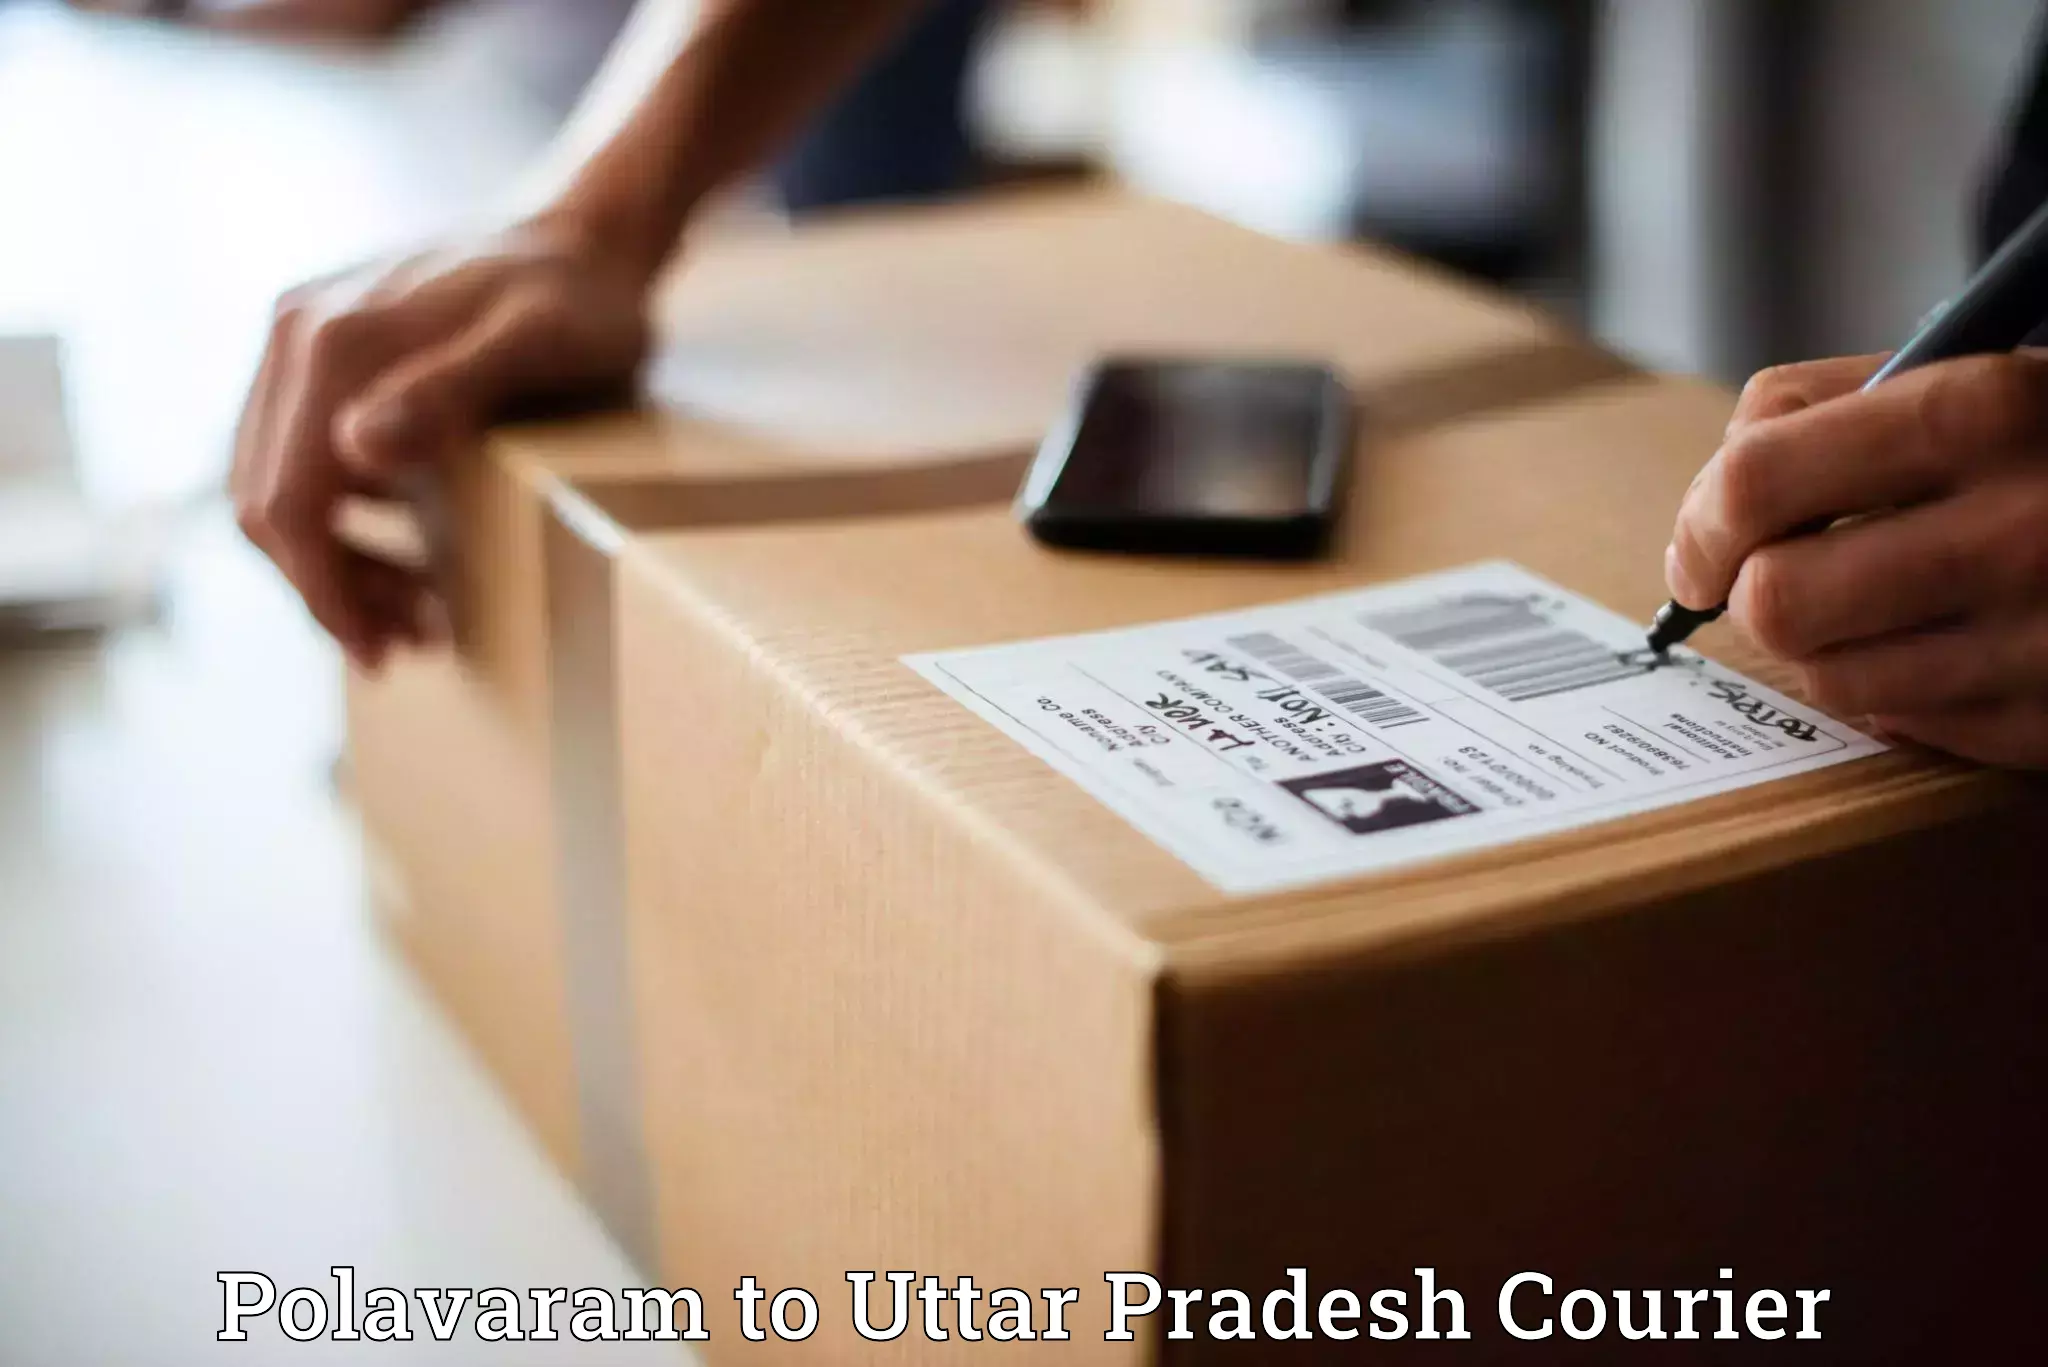 Custom courier packaging Polavaram to Aligarh